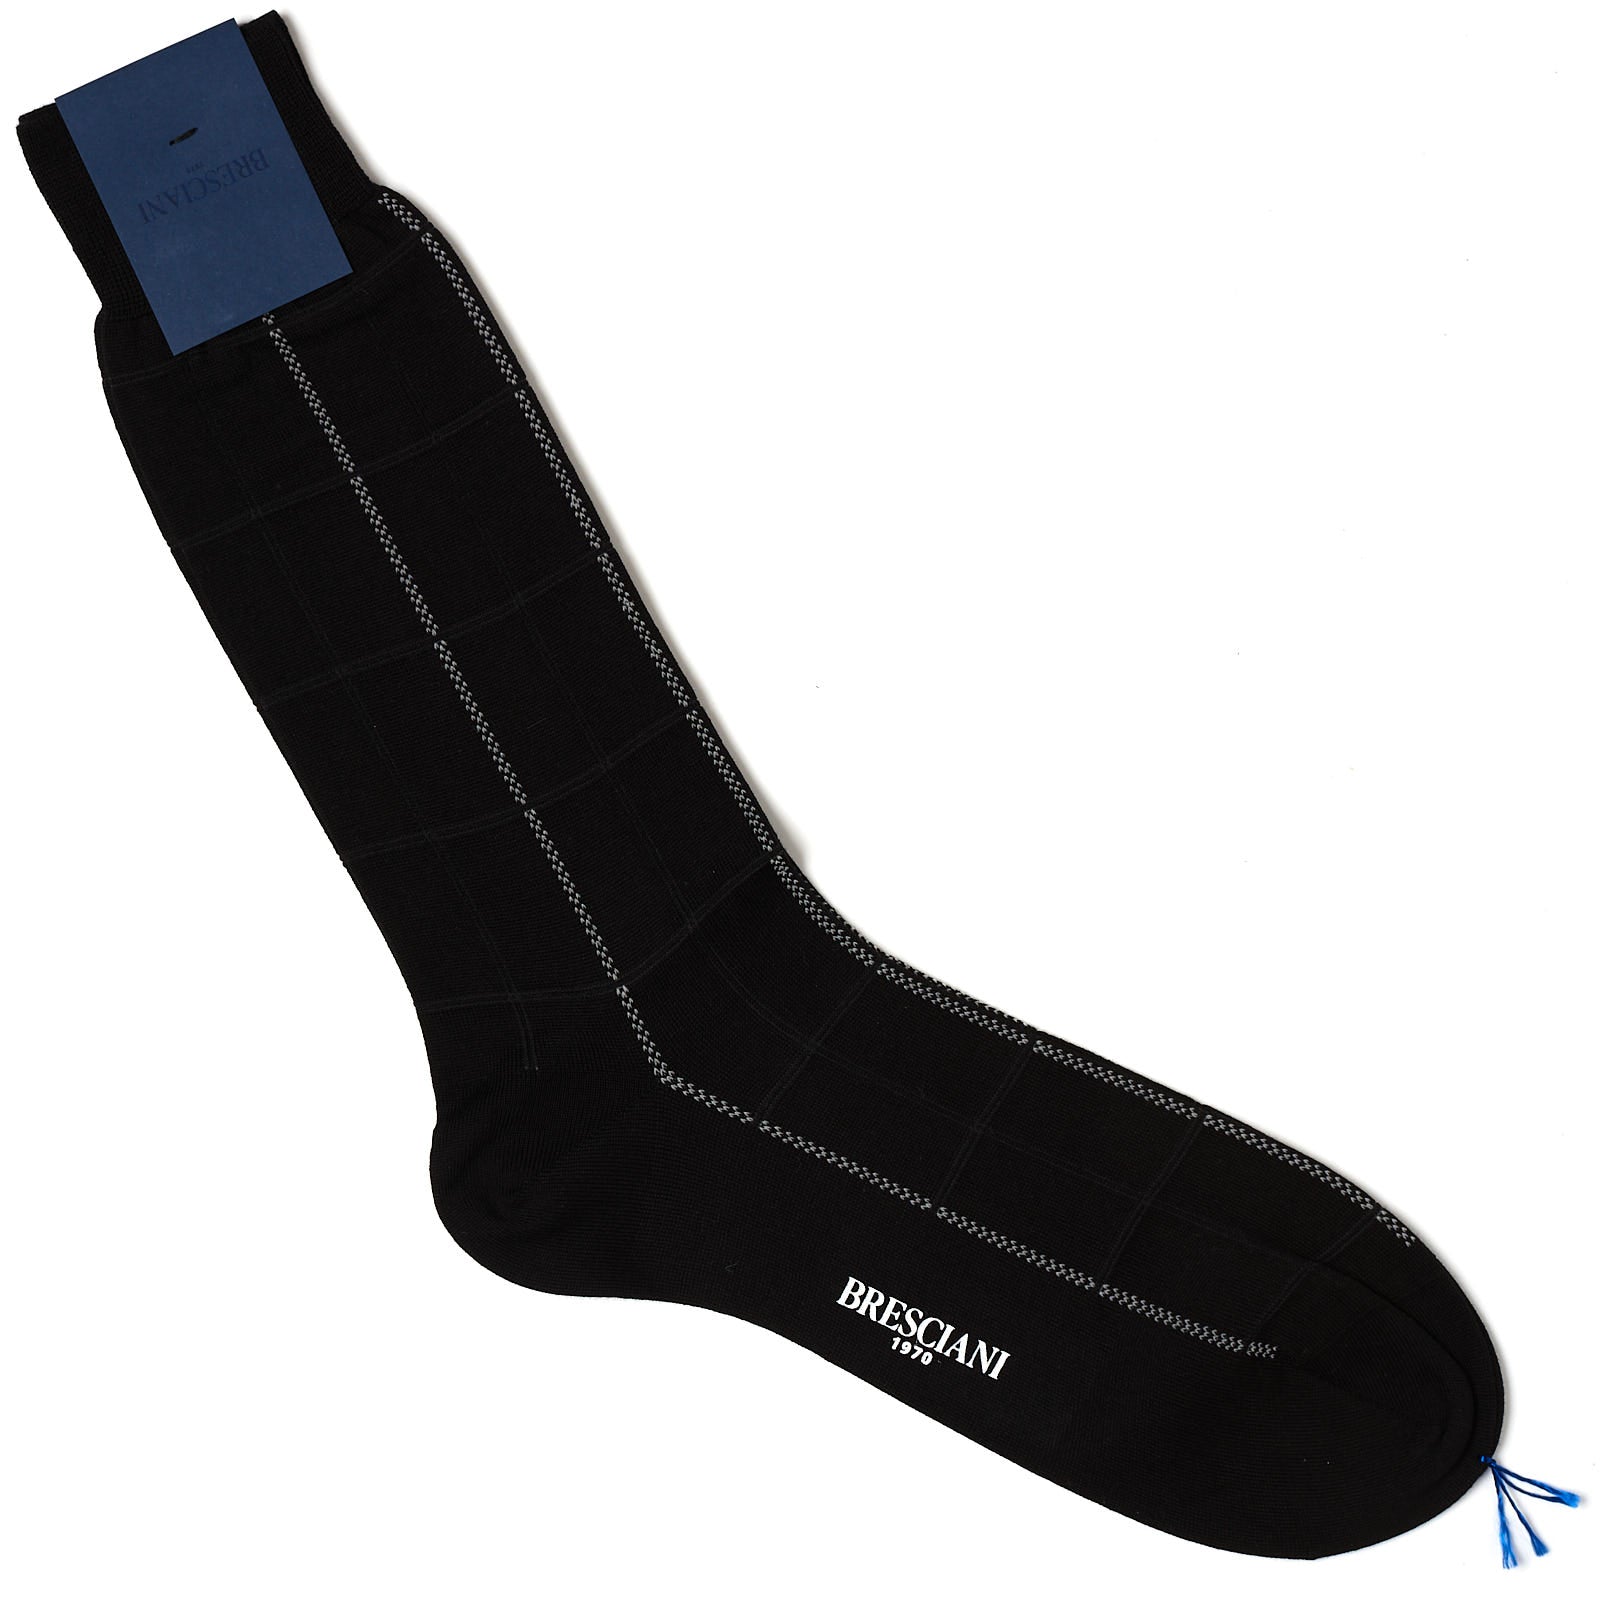 BRESCIANI Cotton Geometry Design Mid Calf Length Socks US M-L